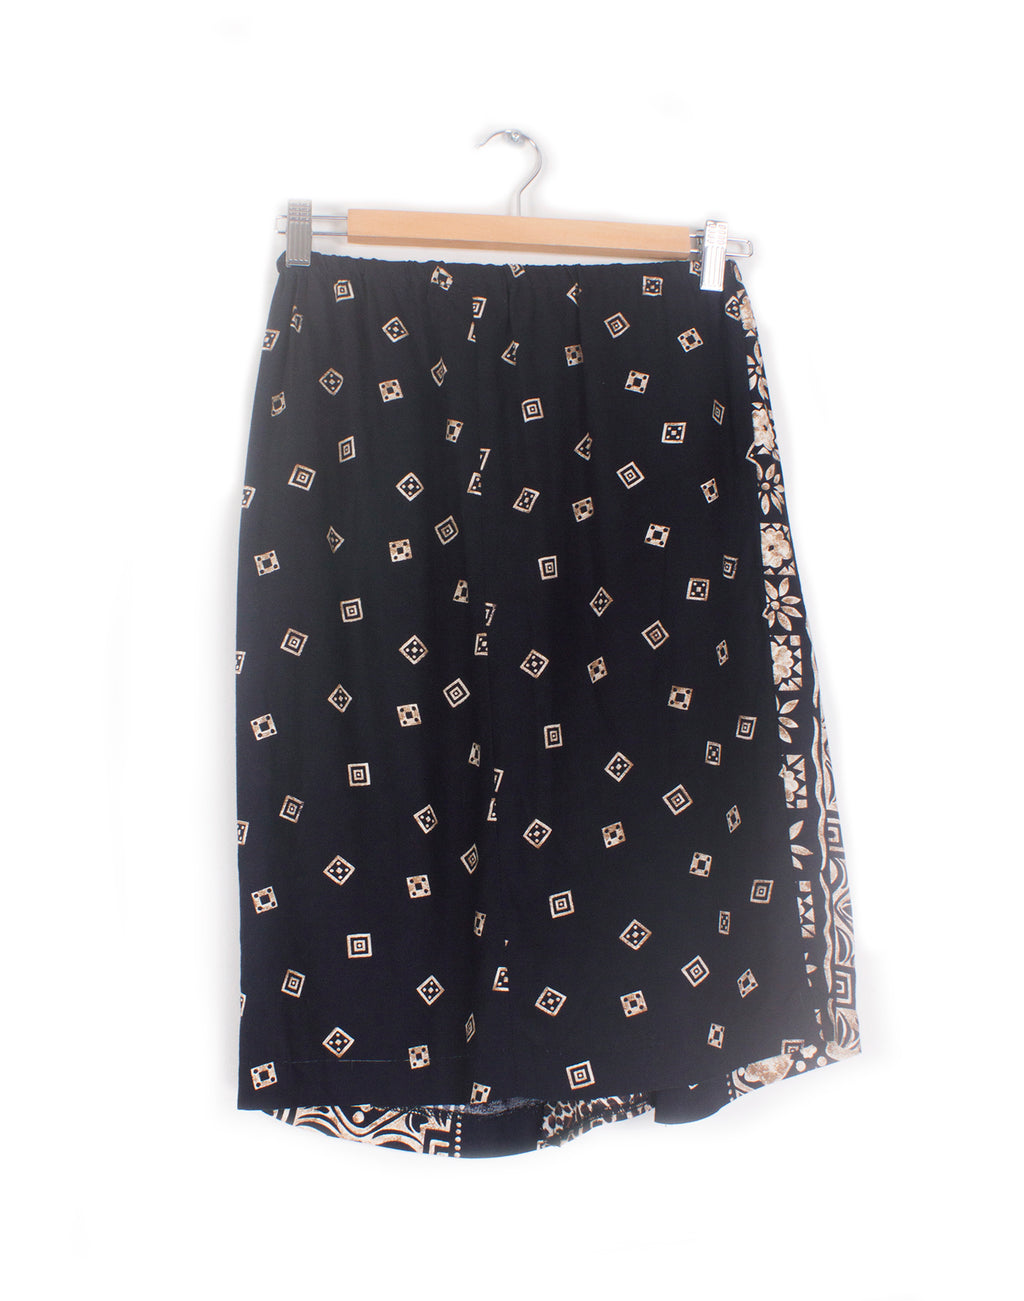 Vintage Upcycled Black Leopard Short Skirt - Size XS